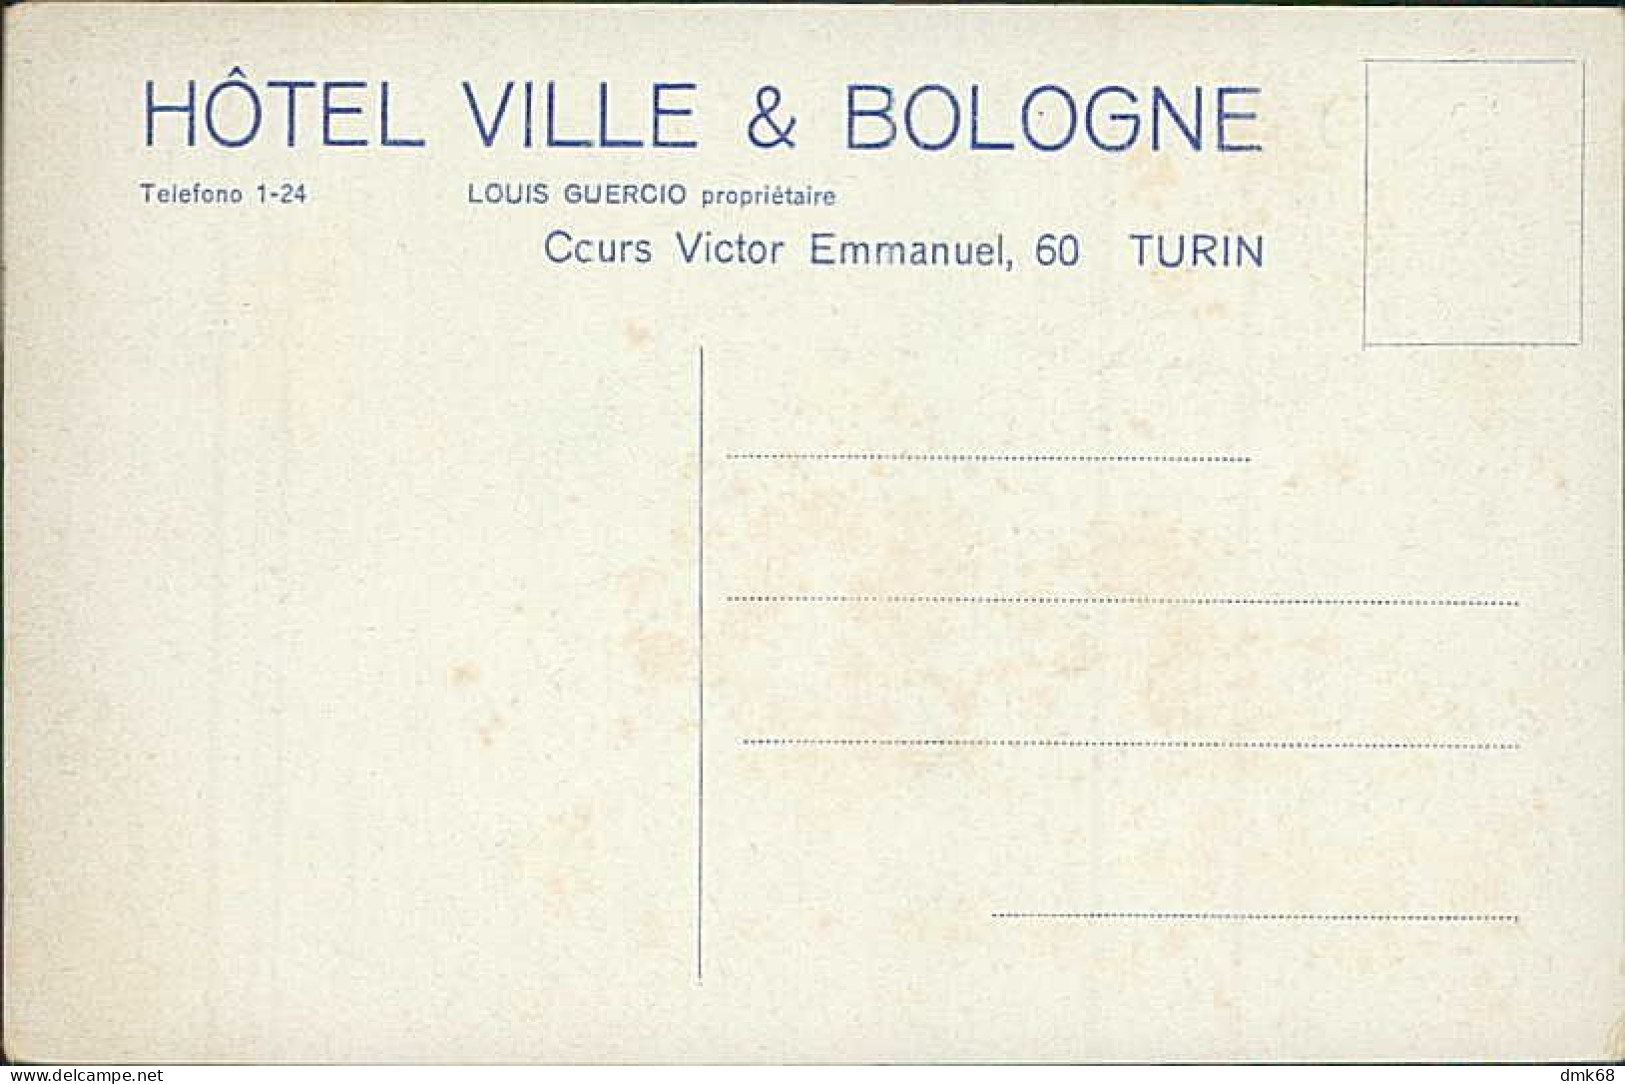 TORINO - HOTEL VILLE & BOLOGNE - 1910s (18282) - Bares, Hoteles Y Restaurantes